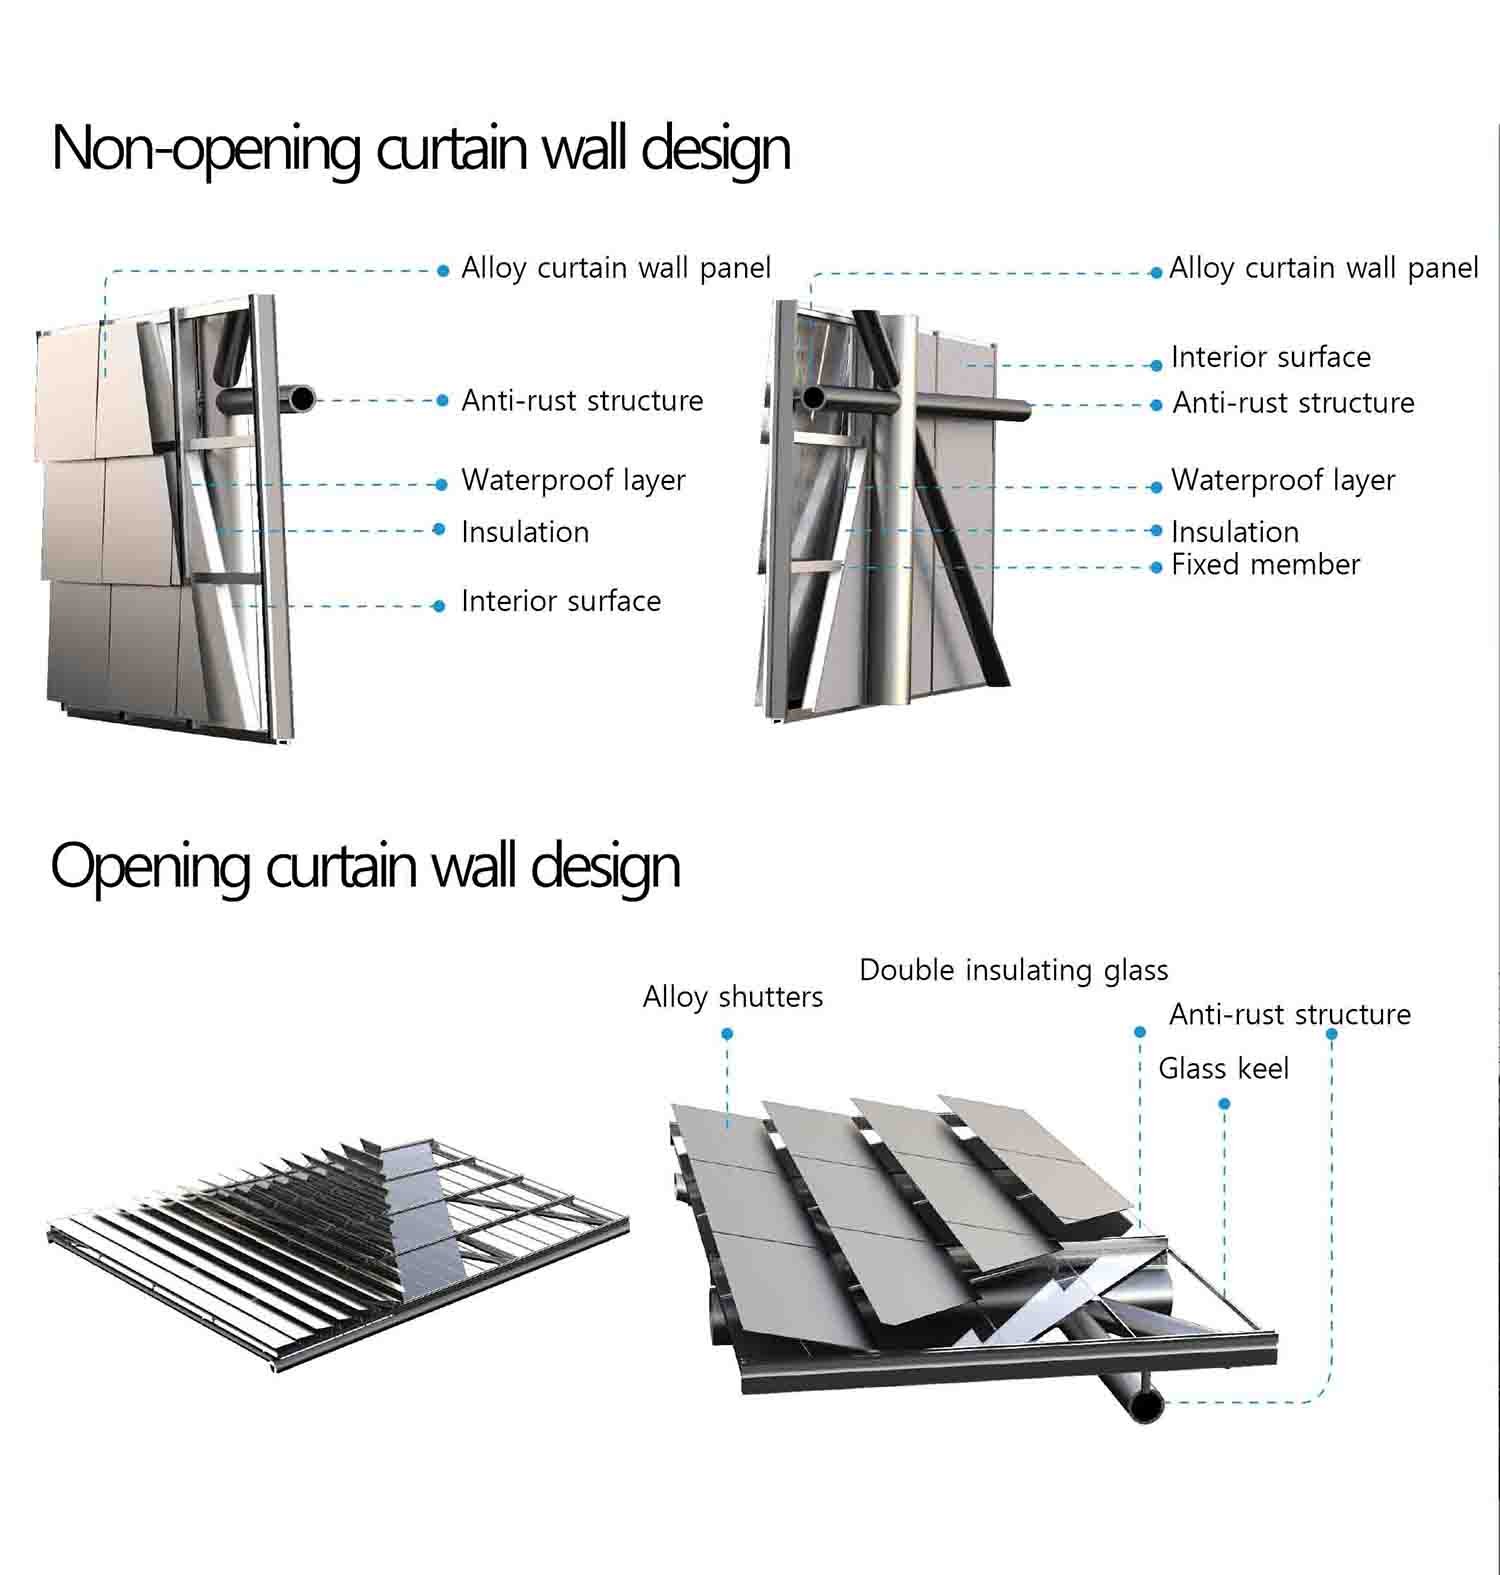 non-opening aurtain wall design | Zhubo Design